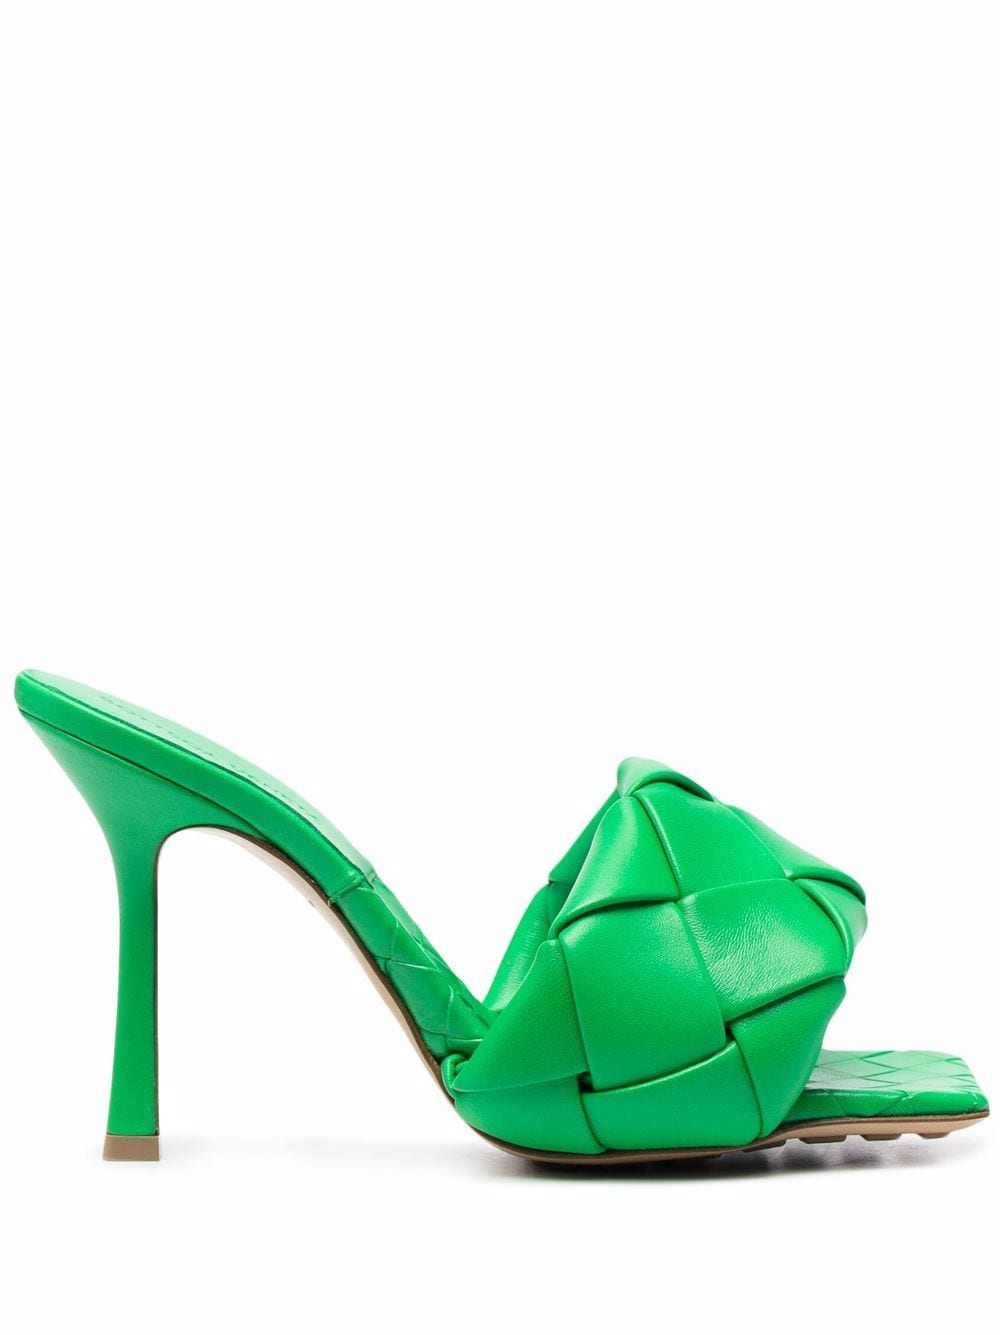 SPOTTED: Dave Keeps it Green in Bottega Veneta & Louis Vuitton